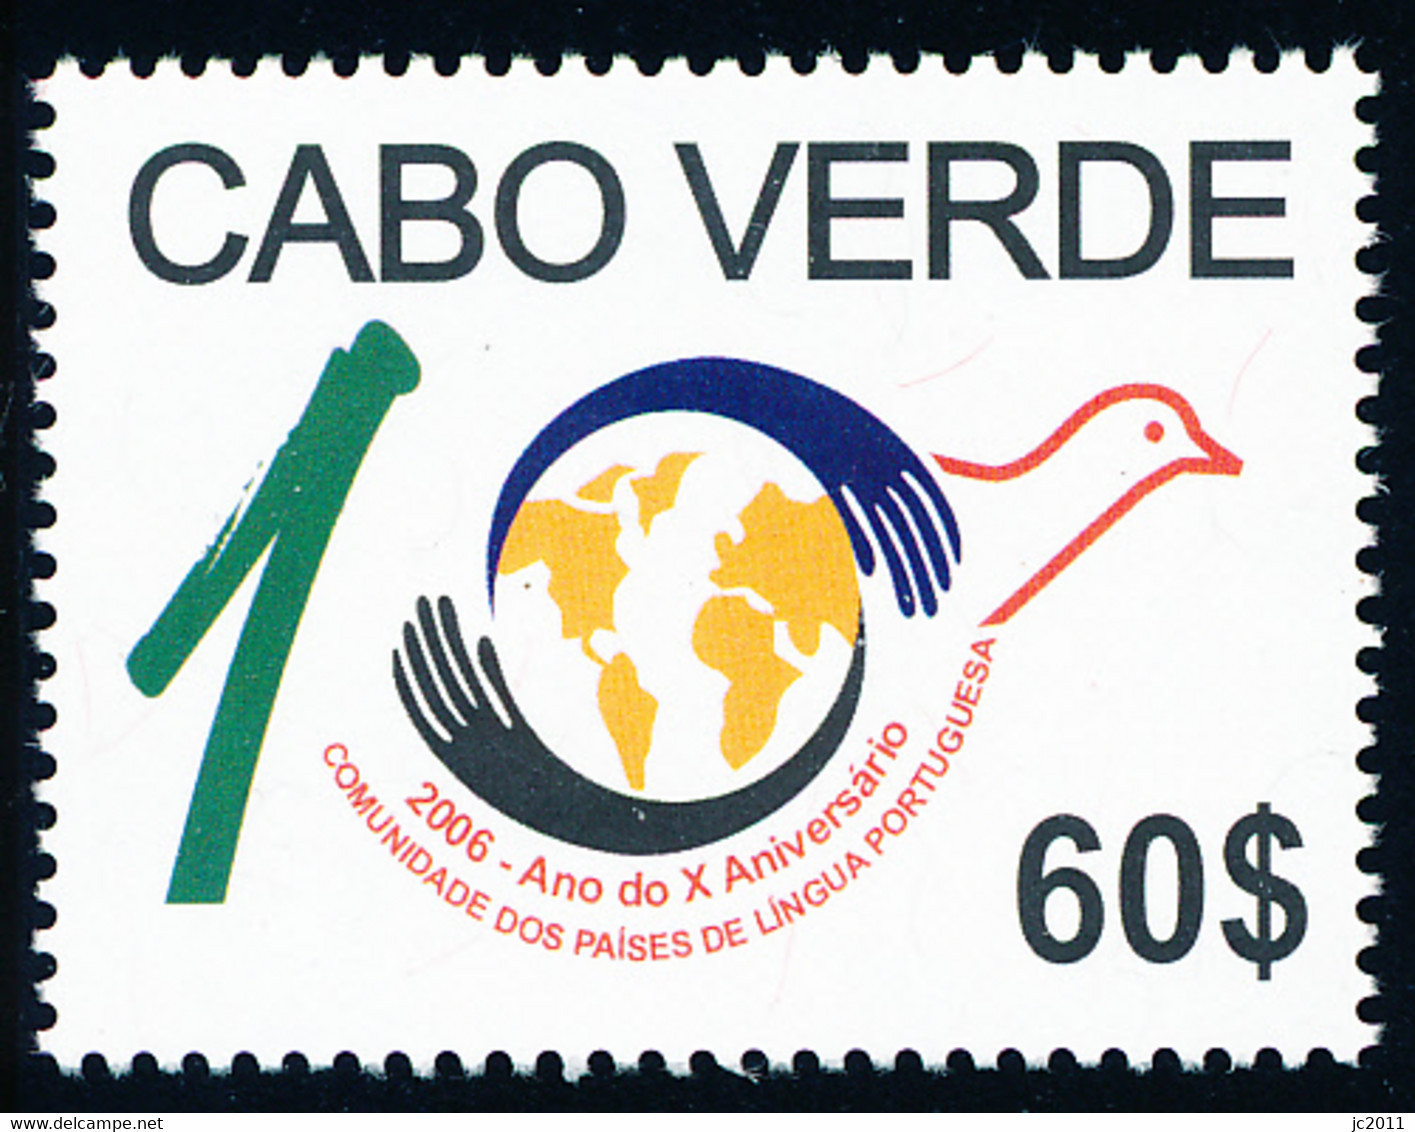 Cabo Verde - 2006 - CPLP - Community Of Countries Of Portuguese Language - Kaapverdische Eilanden